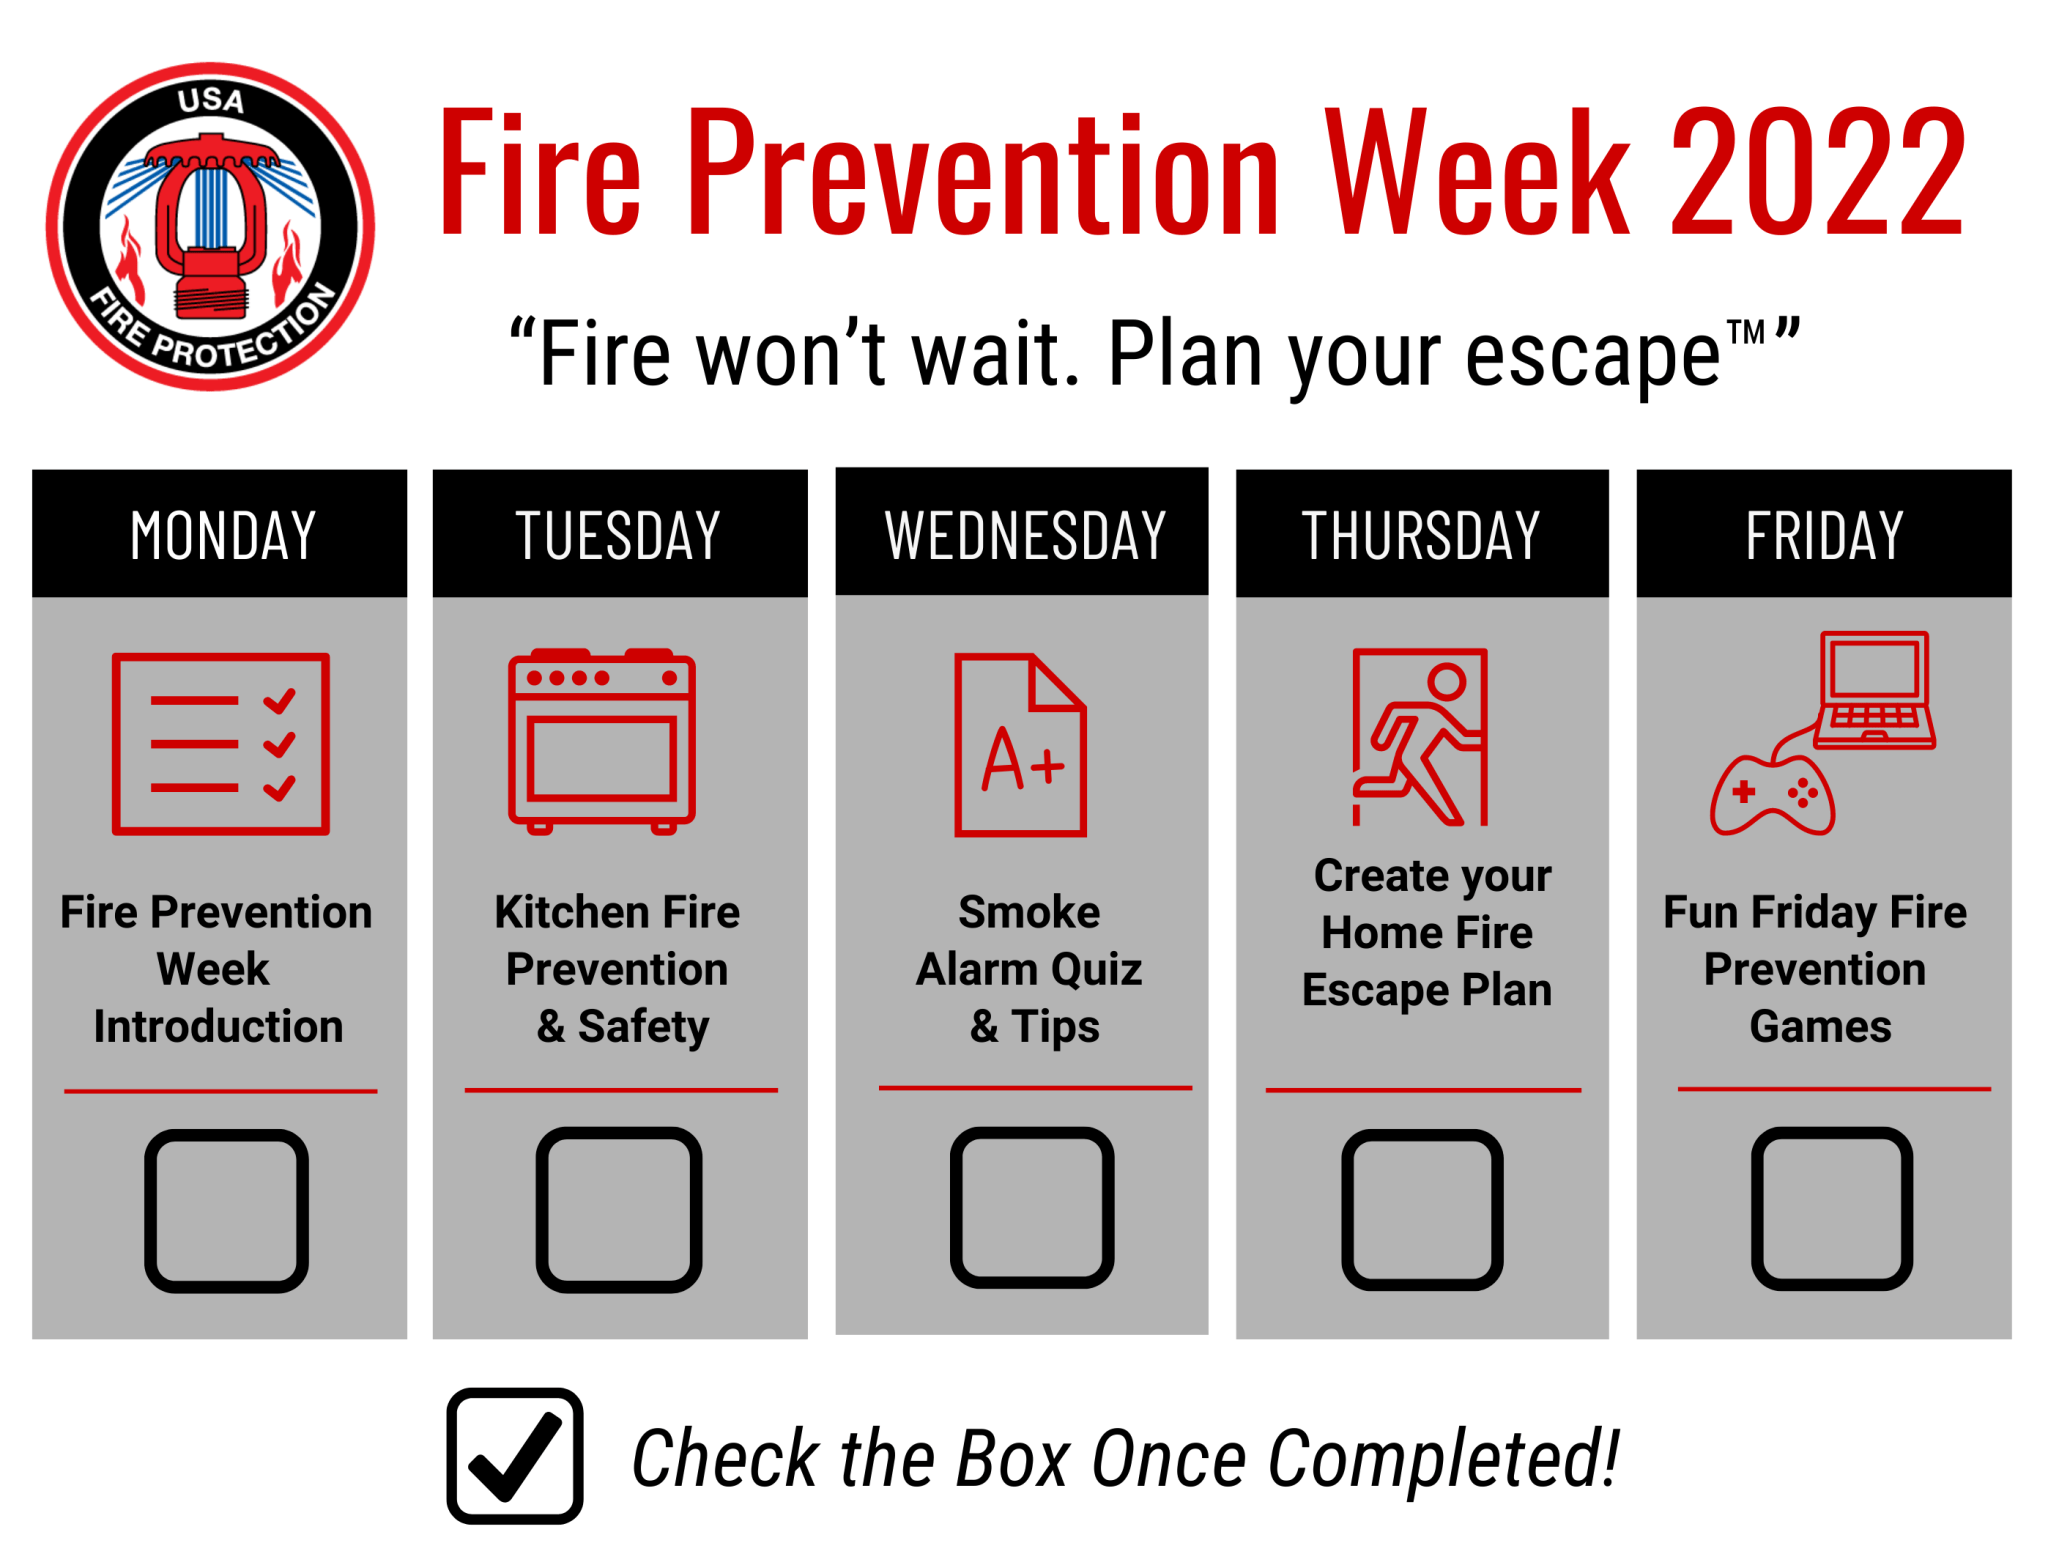 Fire Prevention Week 2022 USAFP